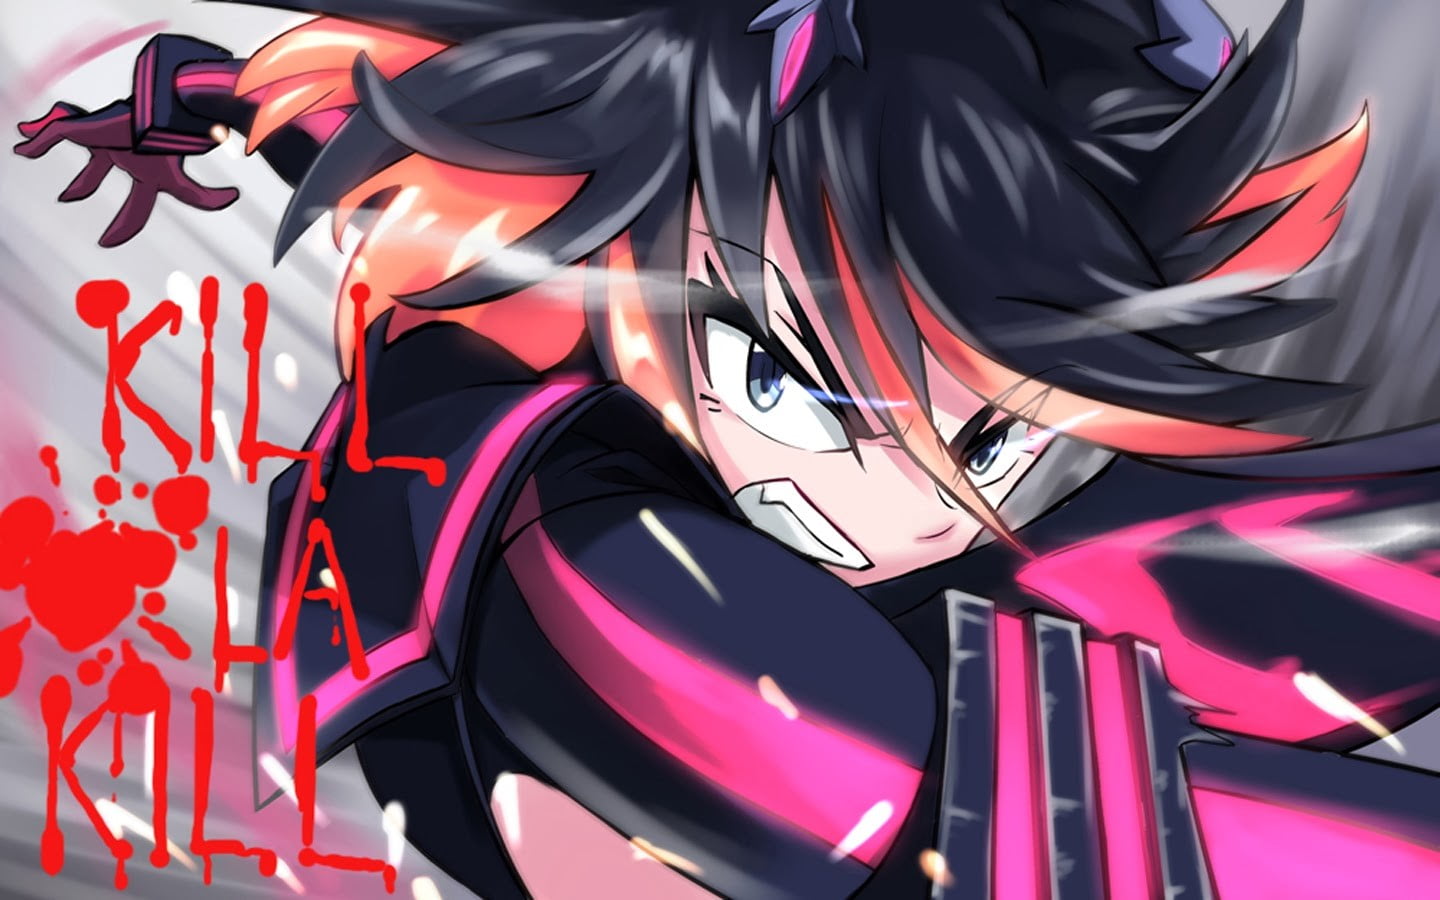 black and pink haired male anime character wallpaper, Kill la Kill, Matoi Ryuuko, Senketsu